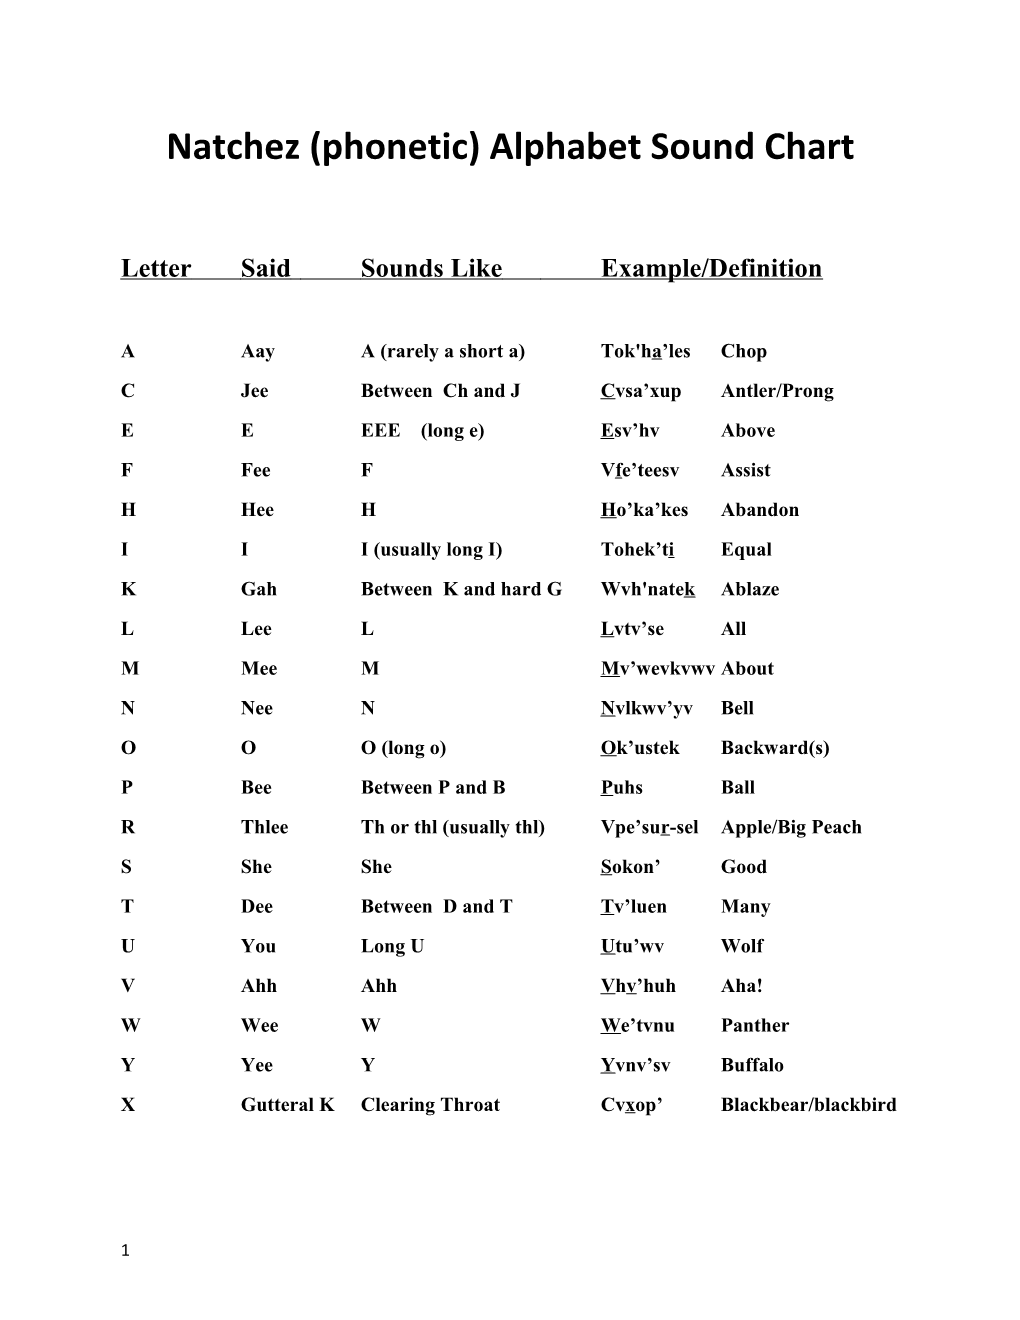 Natchez (Phonetic) Alphabet Sound Chart